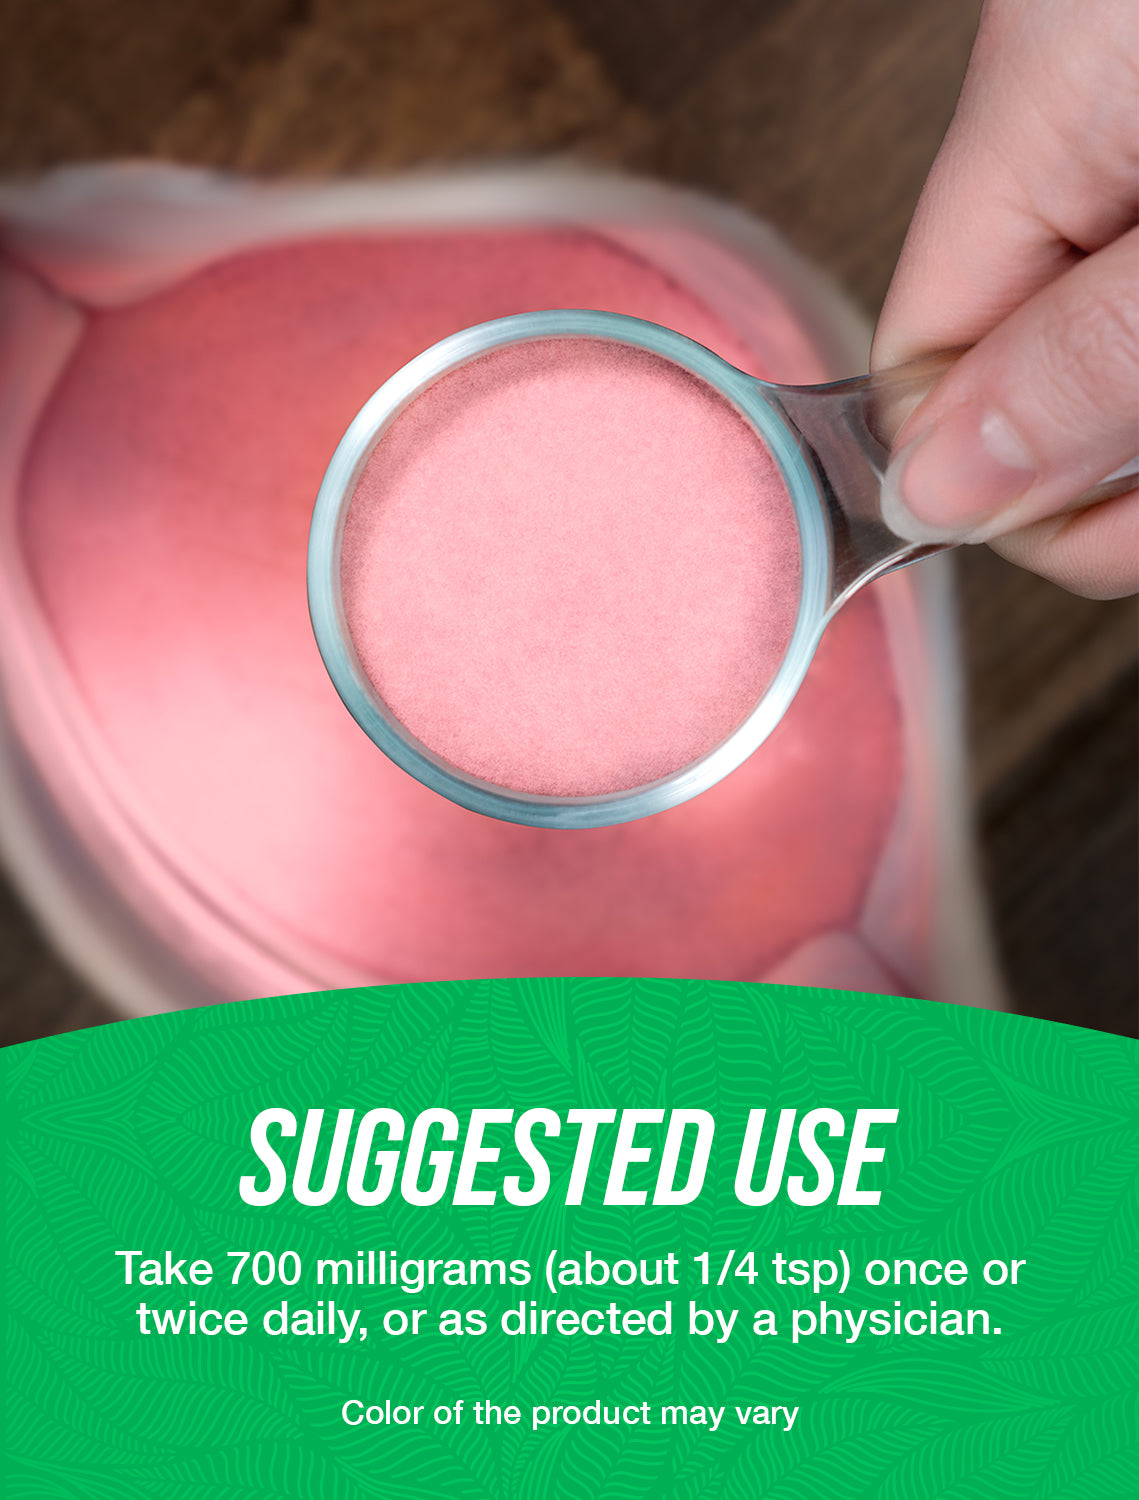 Watermelon juice powder suggested use image